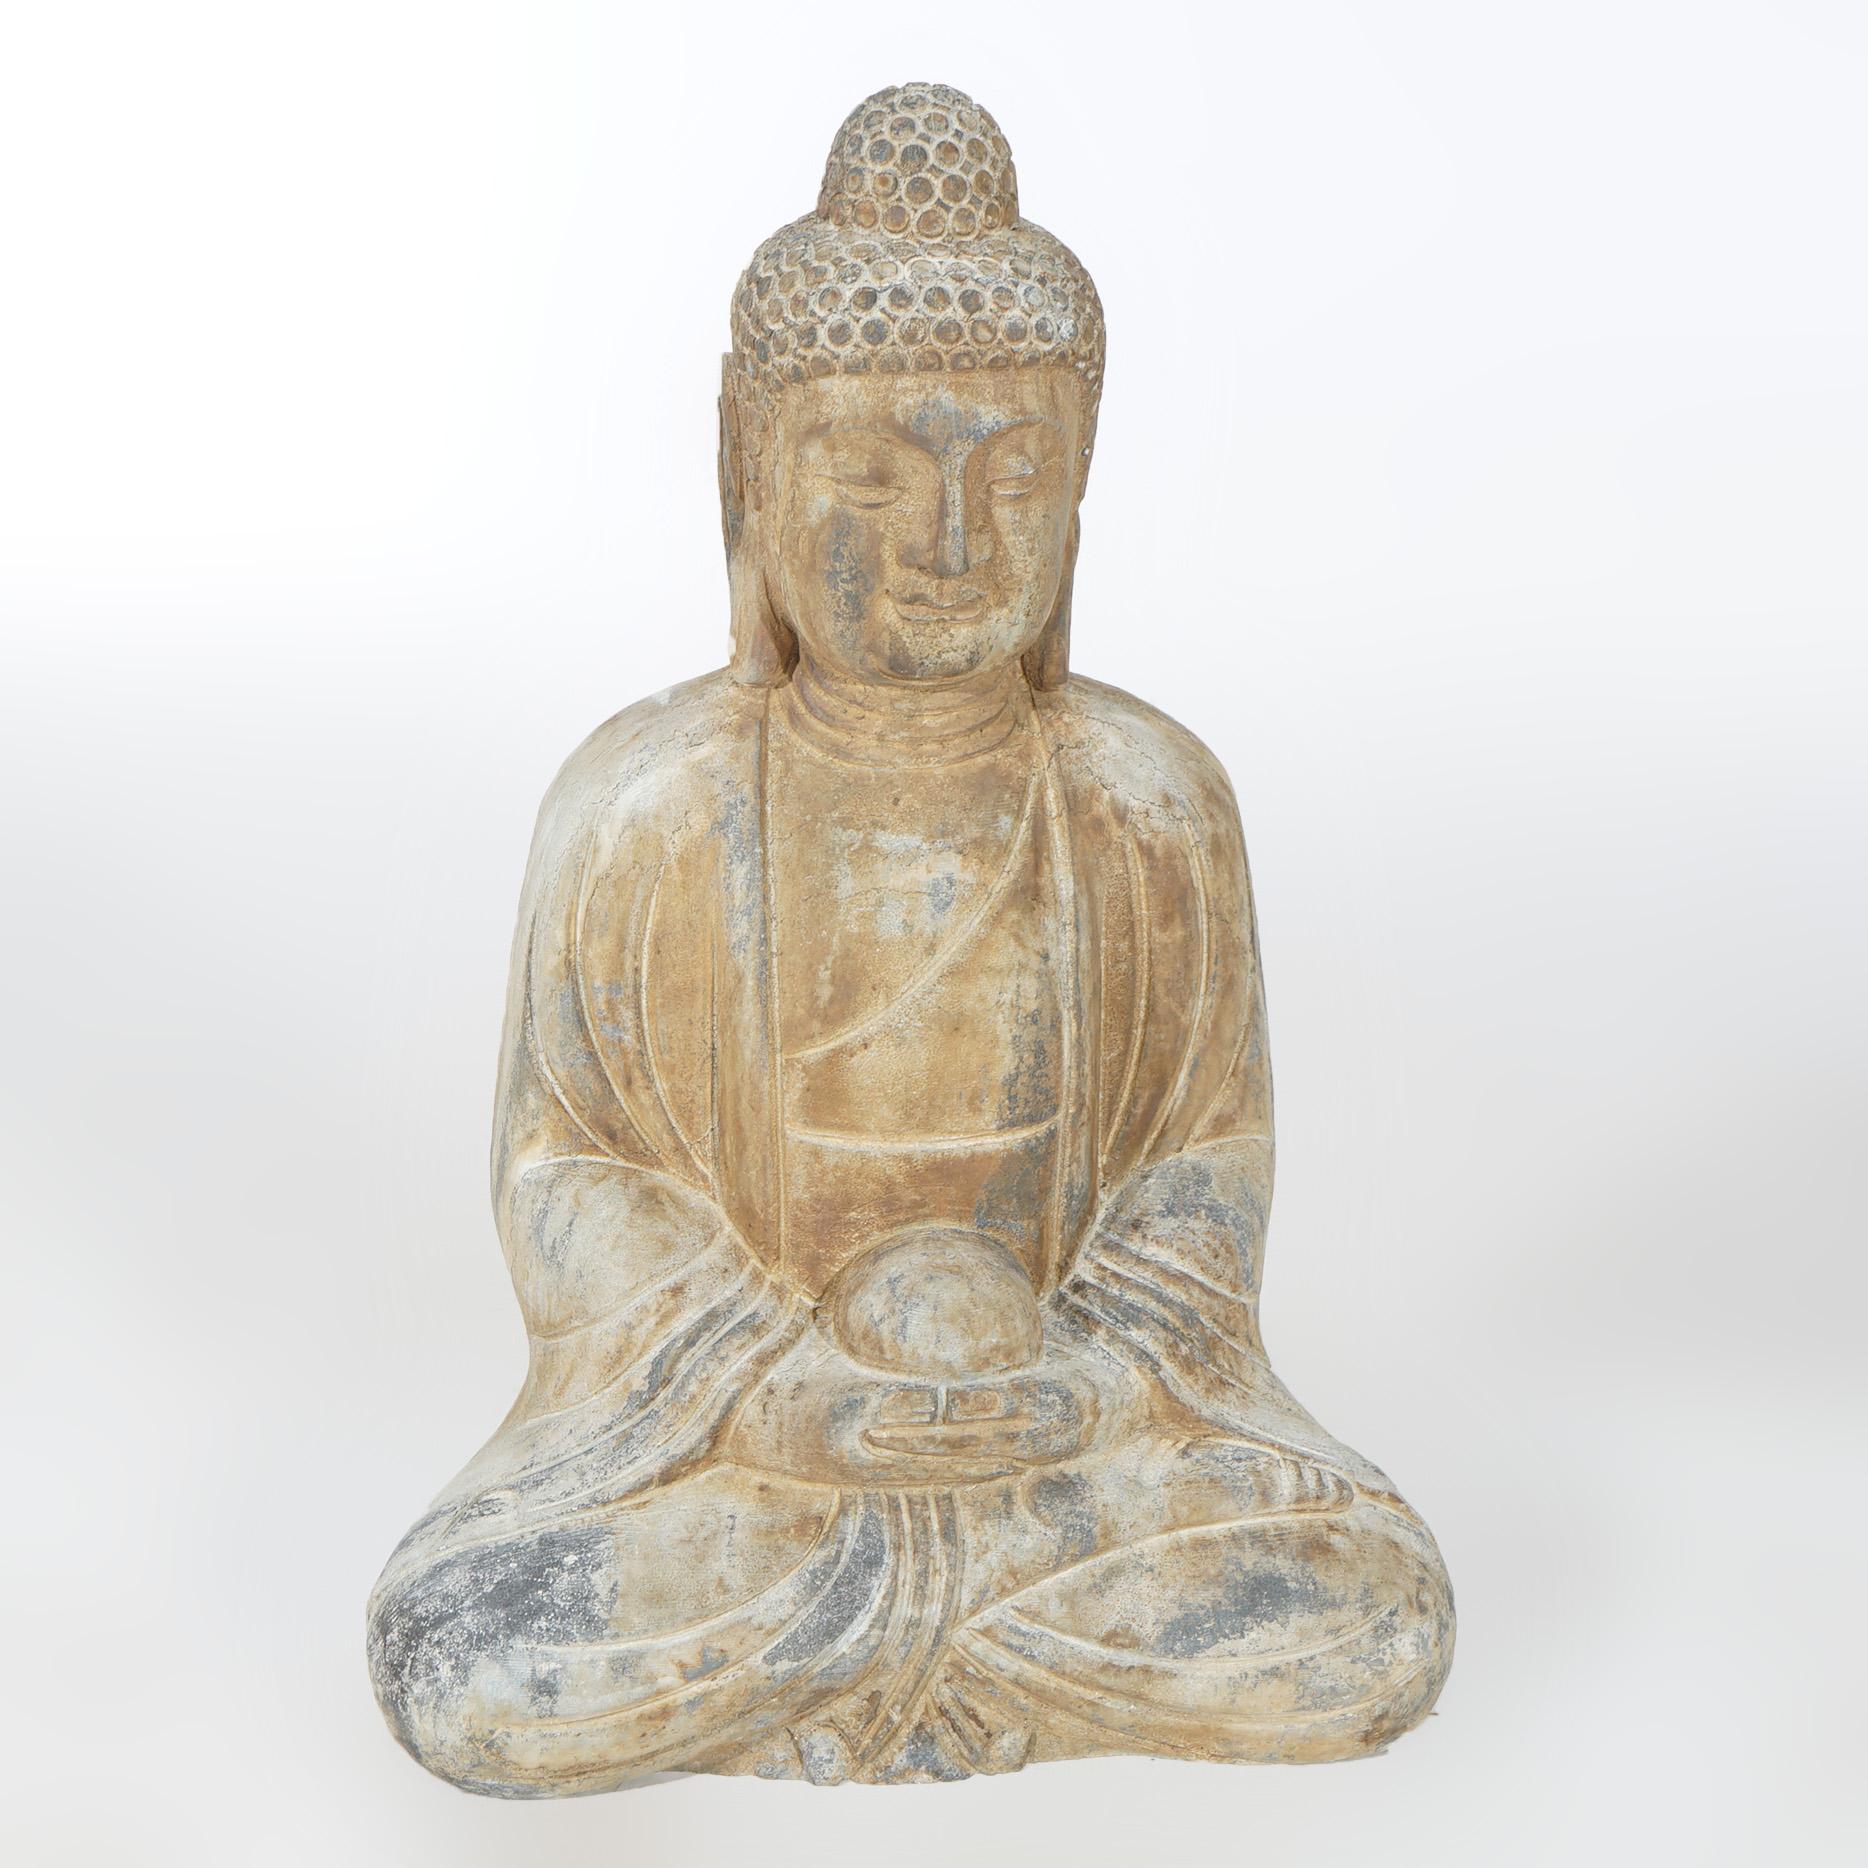 A cast hard stone garden statue of Buddha, 21st century

Measures - 24